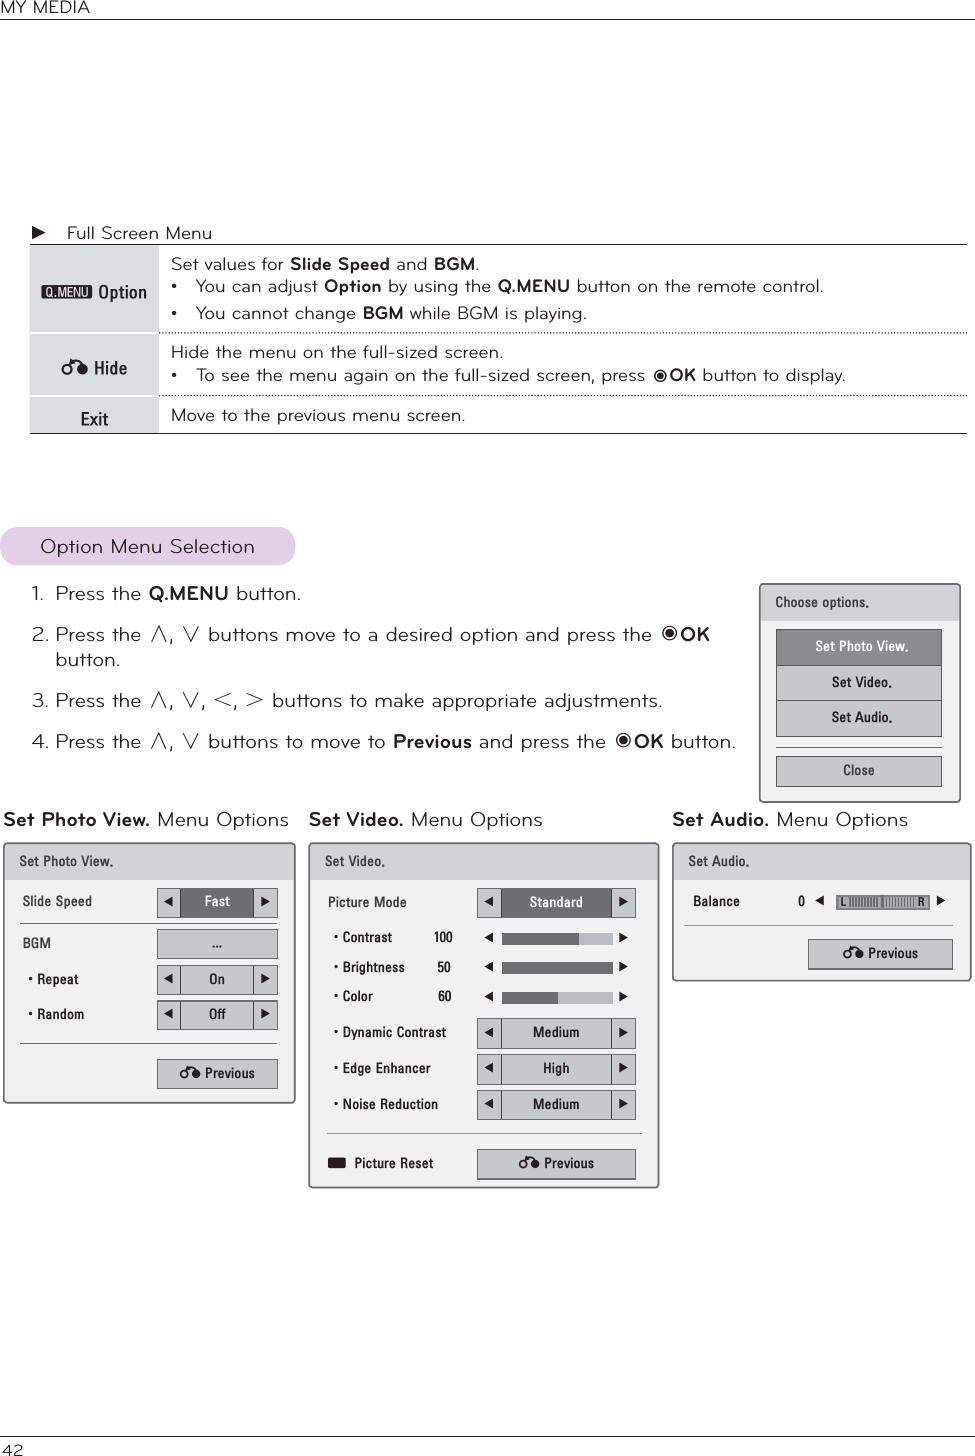 42 ŹFull Screen Menu᳋2SWLRQSet values for Slide Speed and BGM.•  You can adjust Option by using the Q.MENU button on the remote control. •  You cannot change BGM while BGM is playing.ᱷ+LGH Hide the menu on the full-sized screen.•  To see the menu again on the full-sized screen, press ᰷OK button to display.([LW Move to the previous menu screen.Option Menu Selection1. Press the Q.MENU button.2. Press the ġ, Ģ buttons move to a desired option and press the 󱡧OK button.3. Press the ġ, Ģ, ˘, ˚ buttons to make appropriate adjustments.4. Press the ġ, Ģ buttons to move to Previous and press the 󱡧OK button. 6HW3KRWR9LHZ6OLGH6SHHG ܁)DVW ۽%*0 ؒ5HSHDW ܁2Q ۽ؒ5DQGRP ܁2II ۽ᰙ3UHYLRXV6HW9LGHR3LFWXUH0RGH ܁6WDQGDUG ۽ؒ&amp;RQWUDVW ܁۽ؒ%ULJKWQHVV ܁۽ؒ&amp;RORU ܁۽ؒ&apos;\QDPLF&amp;RQWUDVW ܁0HGLXP ۽ؒ(GJH(QKDQFHU ܁+LJK ۽ؒ1RLVH5HGXFWLRQ ܁0HGLXP ۽ᯕ3LFWXUH5HVHW ᰙ3UHYLRXV&amp;KRRVHRSWLRQV6HW3KRWR9LHZ6HW9LGHR6HW$XGLR&amp;ORVHSet Photo View. Menu Options Set Video. Menu Options Set Audio. Menu Options6HW$XGLR%DODQFH ܁۽ᰙ3UHYLRXV/5MY MEDIA